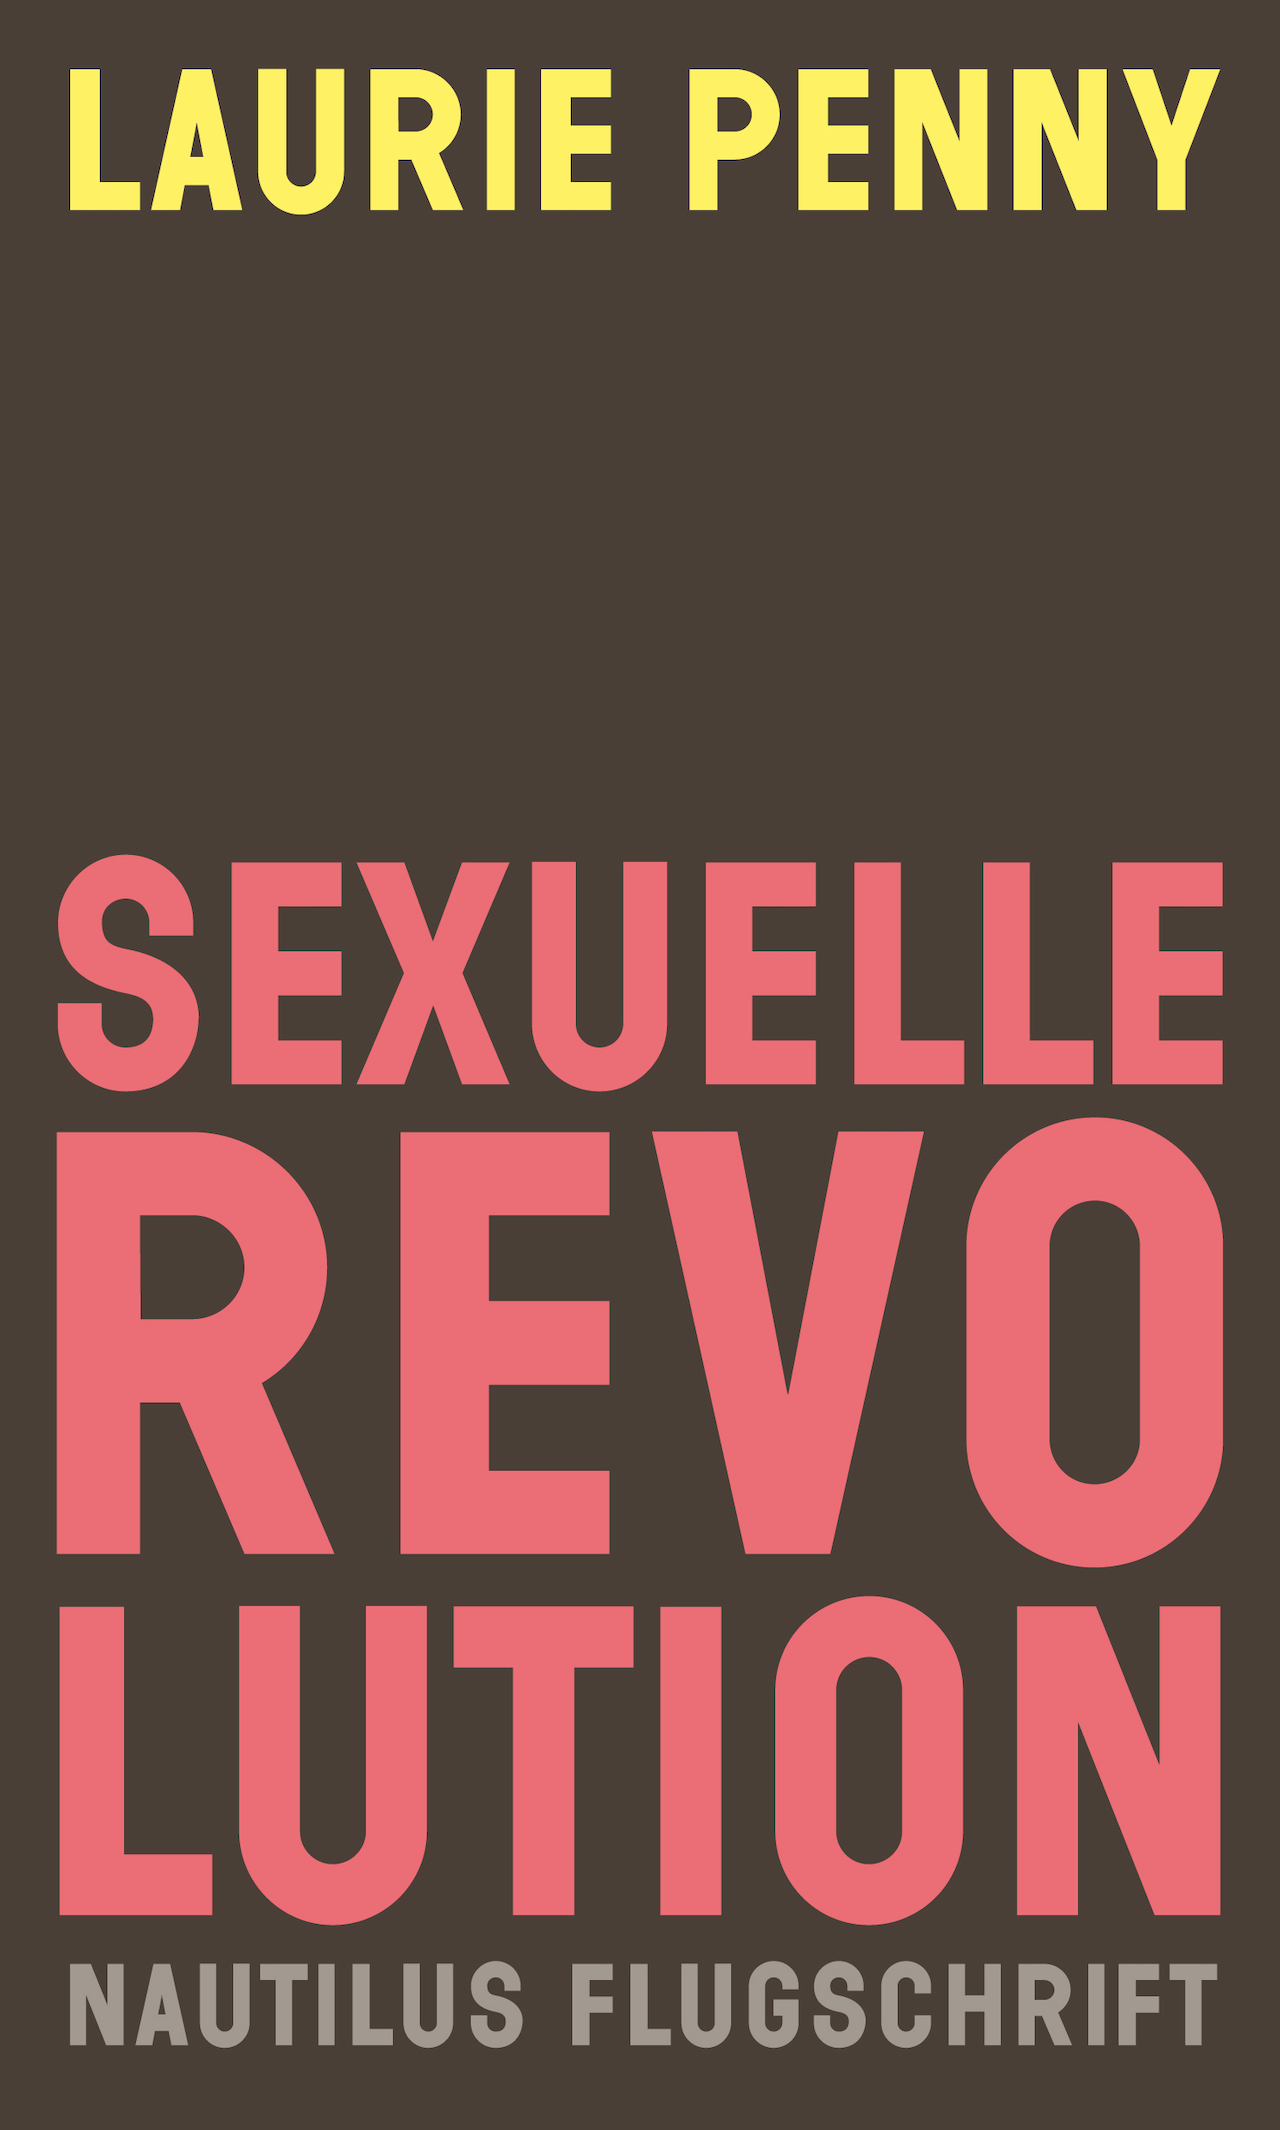 Laurie Penny "Sexuelle Revolution"